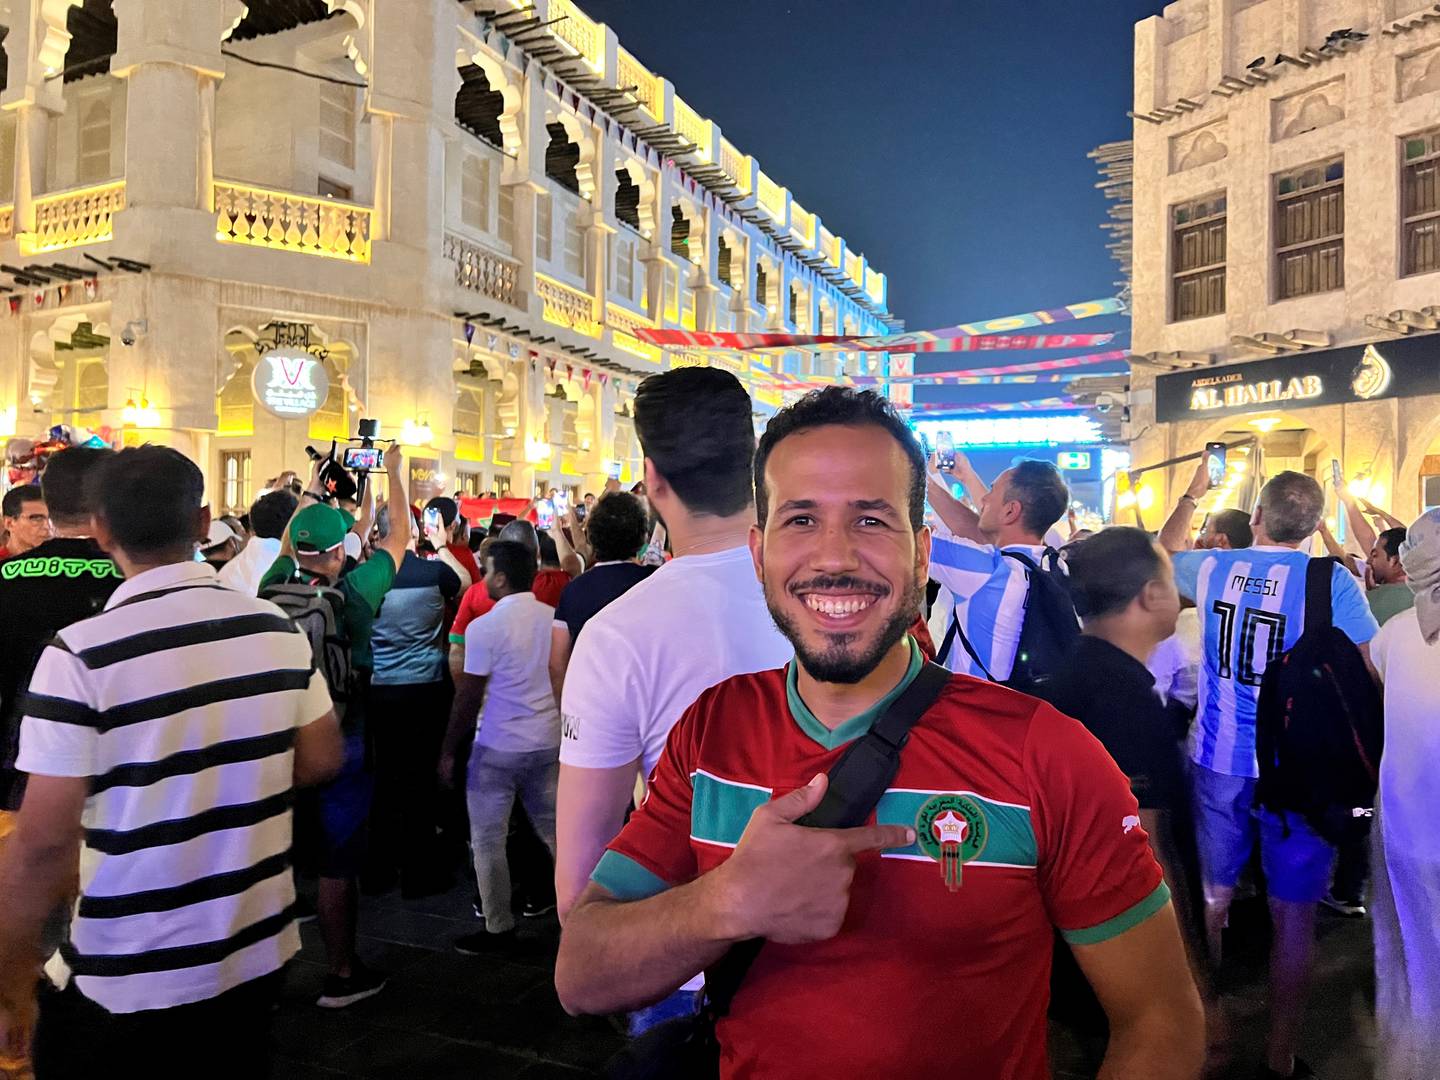 Moroccan fan Abdelhadi Mountaki at Souq Waqif, Doha. Saeed Saeed / The National